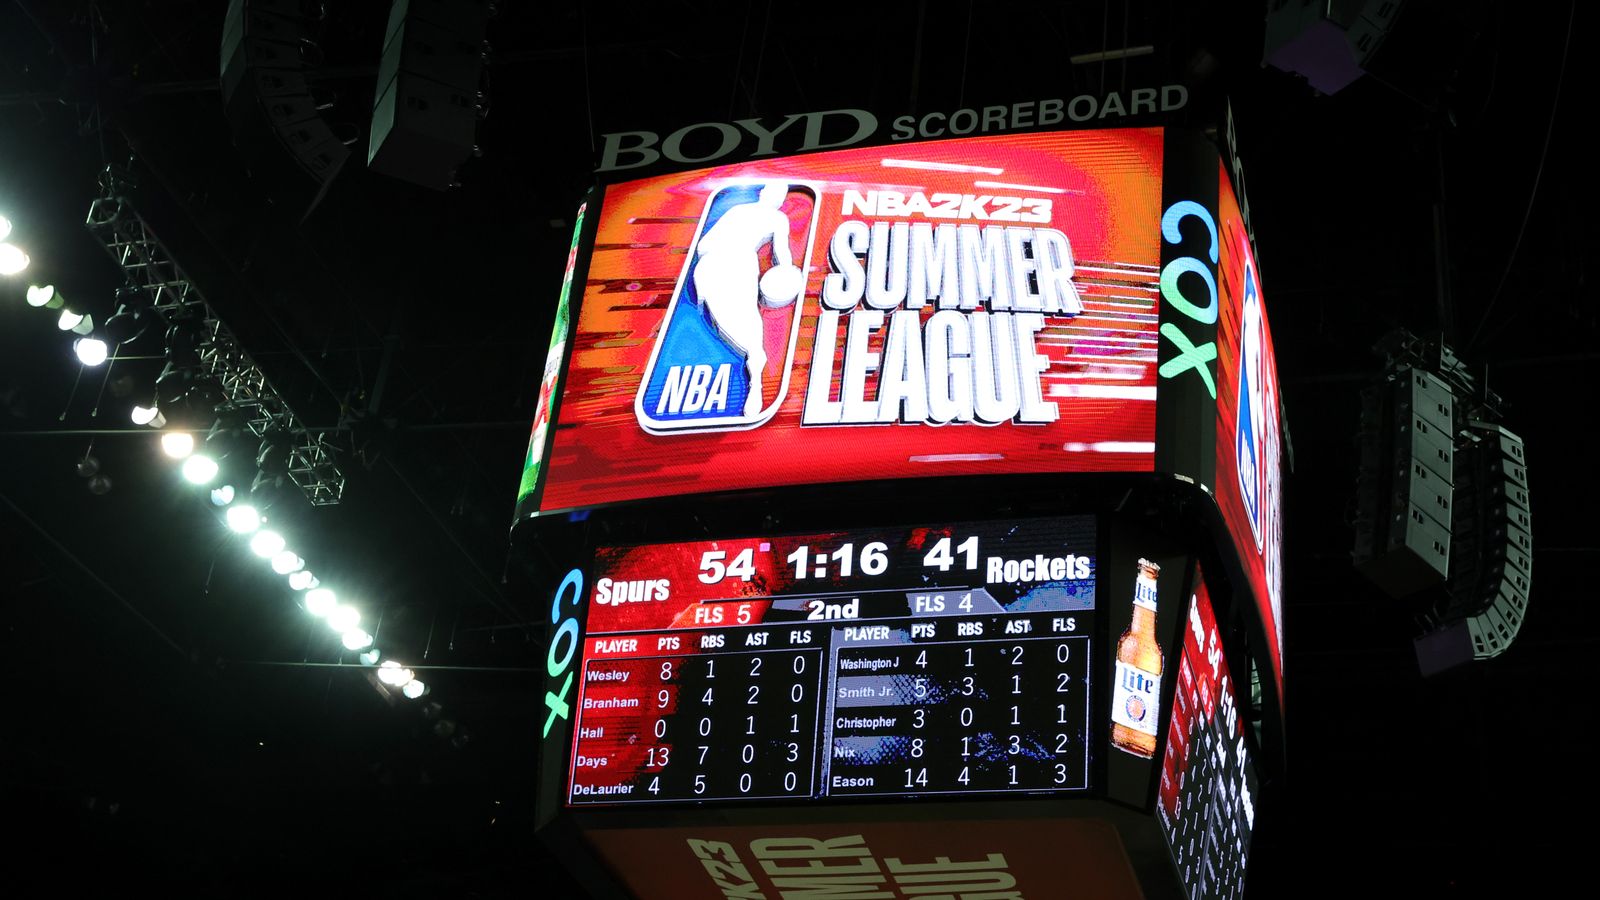 Get to know Celtics prospect Tacko Fall: The Las Vegas Summer League  sensation - The Boston Globe